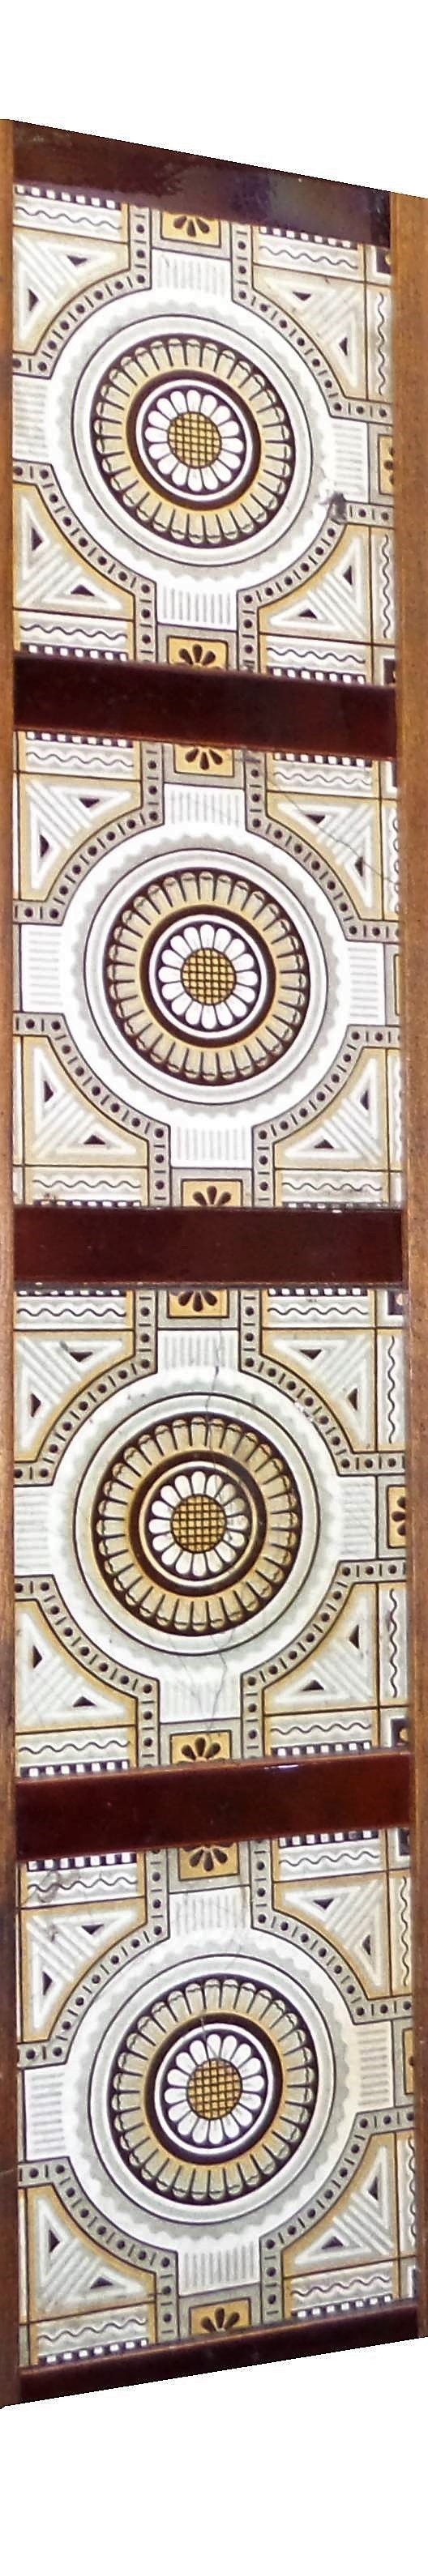 Britain`s Heritage Minton Tiles